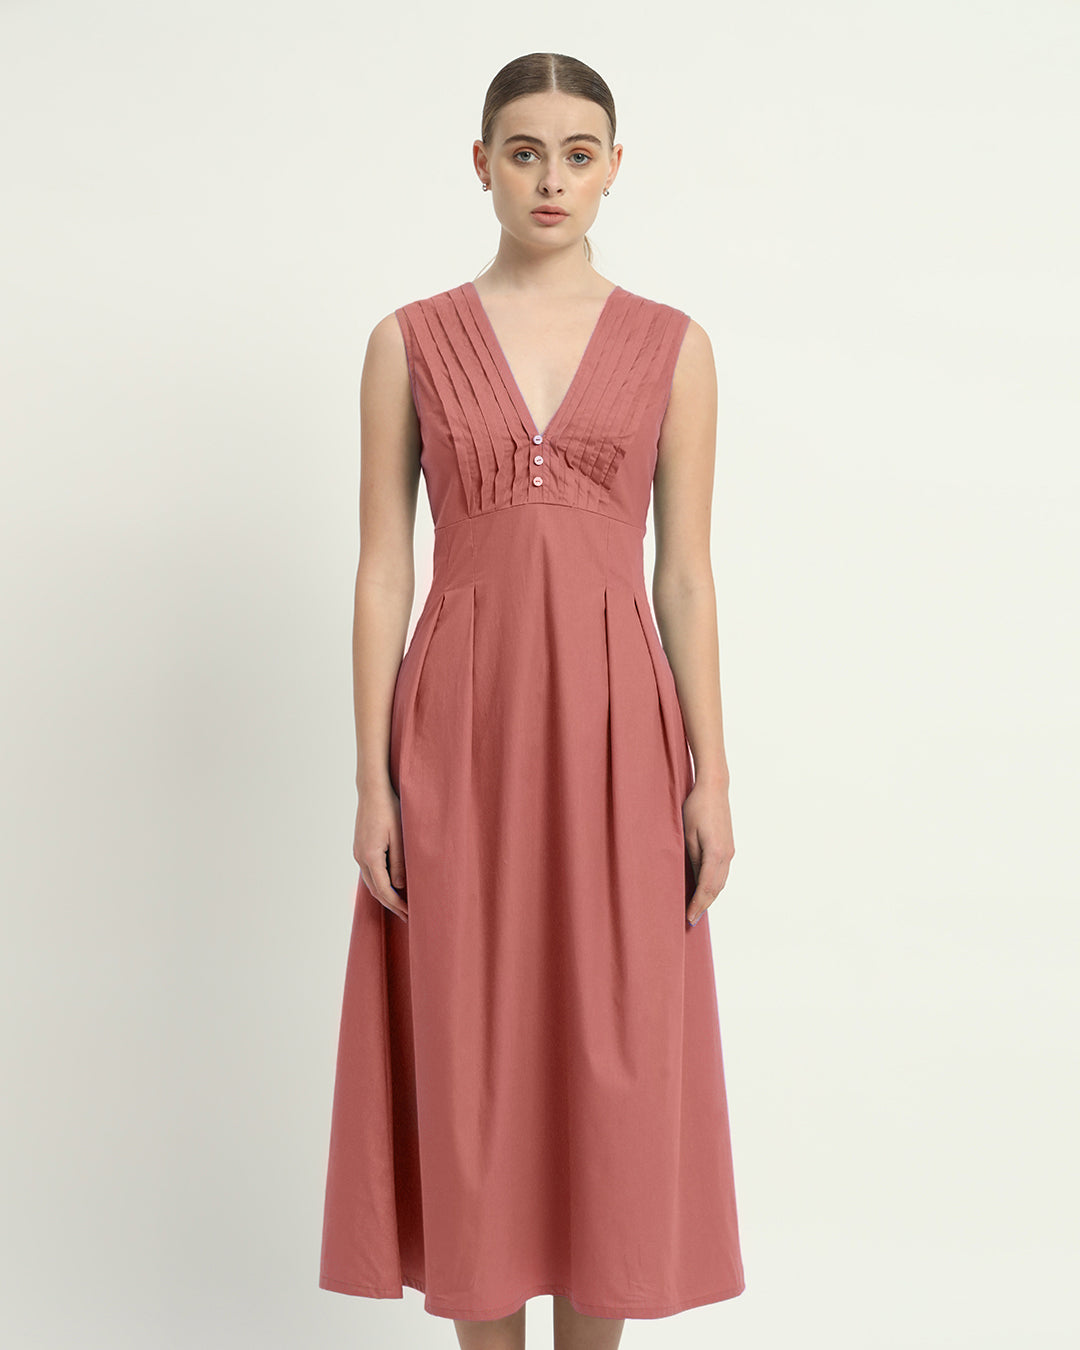 The Ivory Pink Mendoza Cotton Dress